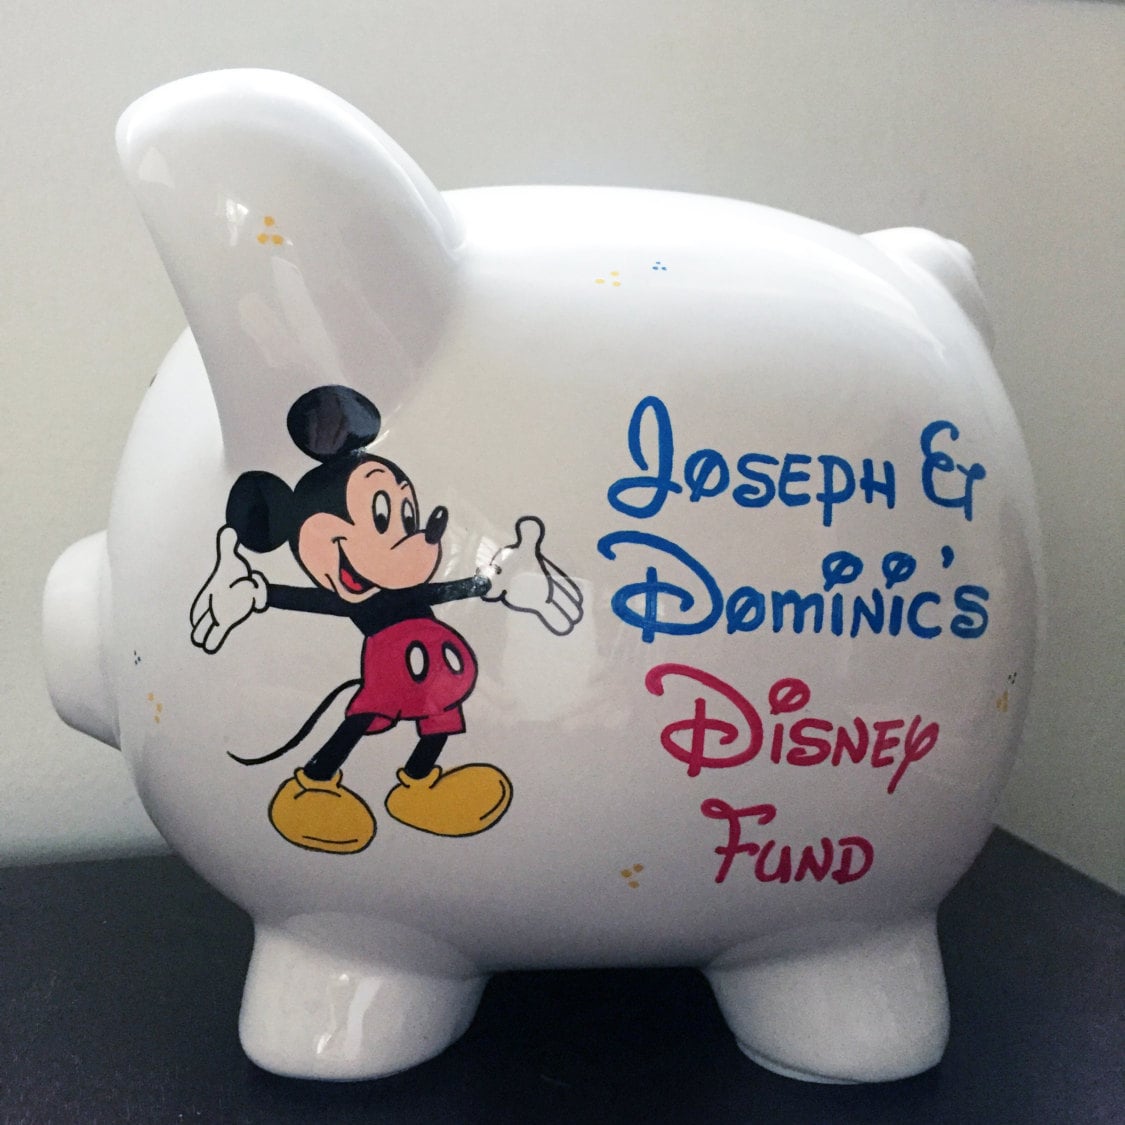 Personalized Disney Fund Piggy Bank